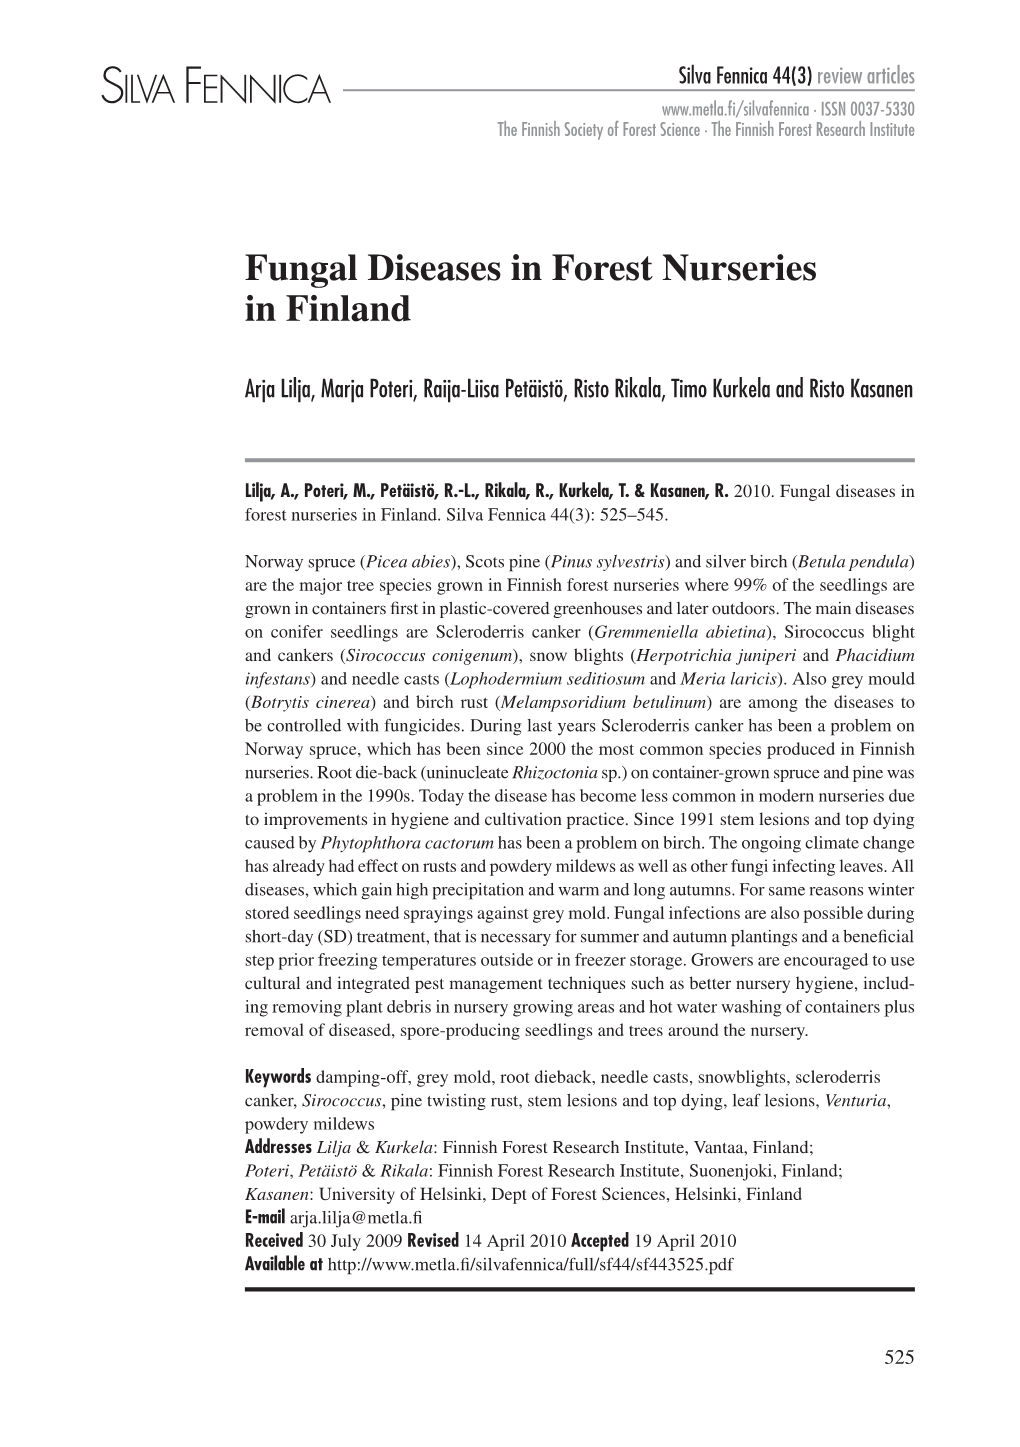 Fungal Diseases in Forest Nurseries in Finland